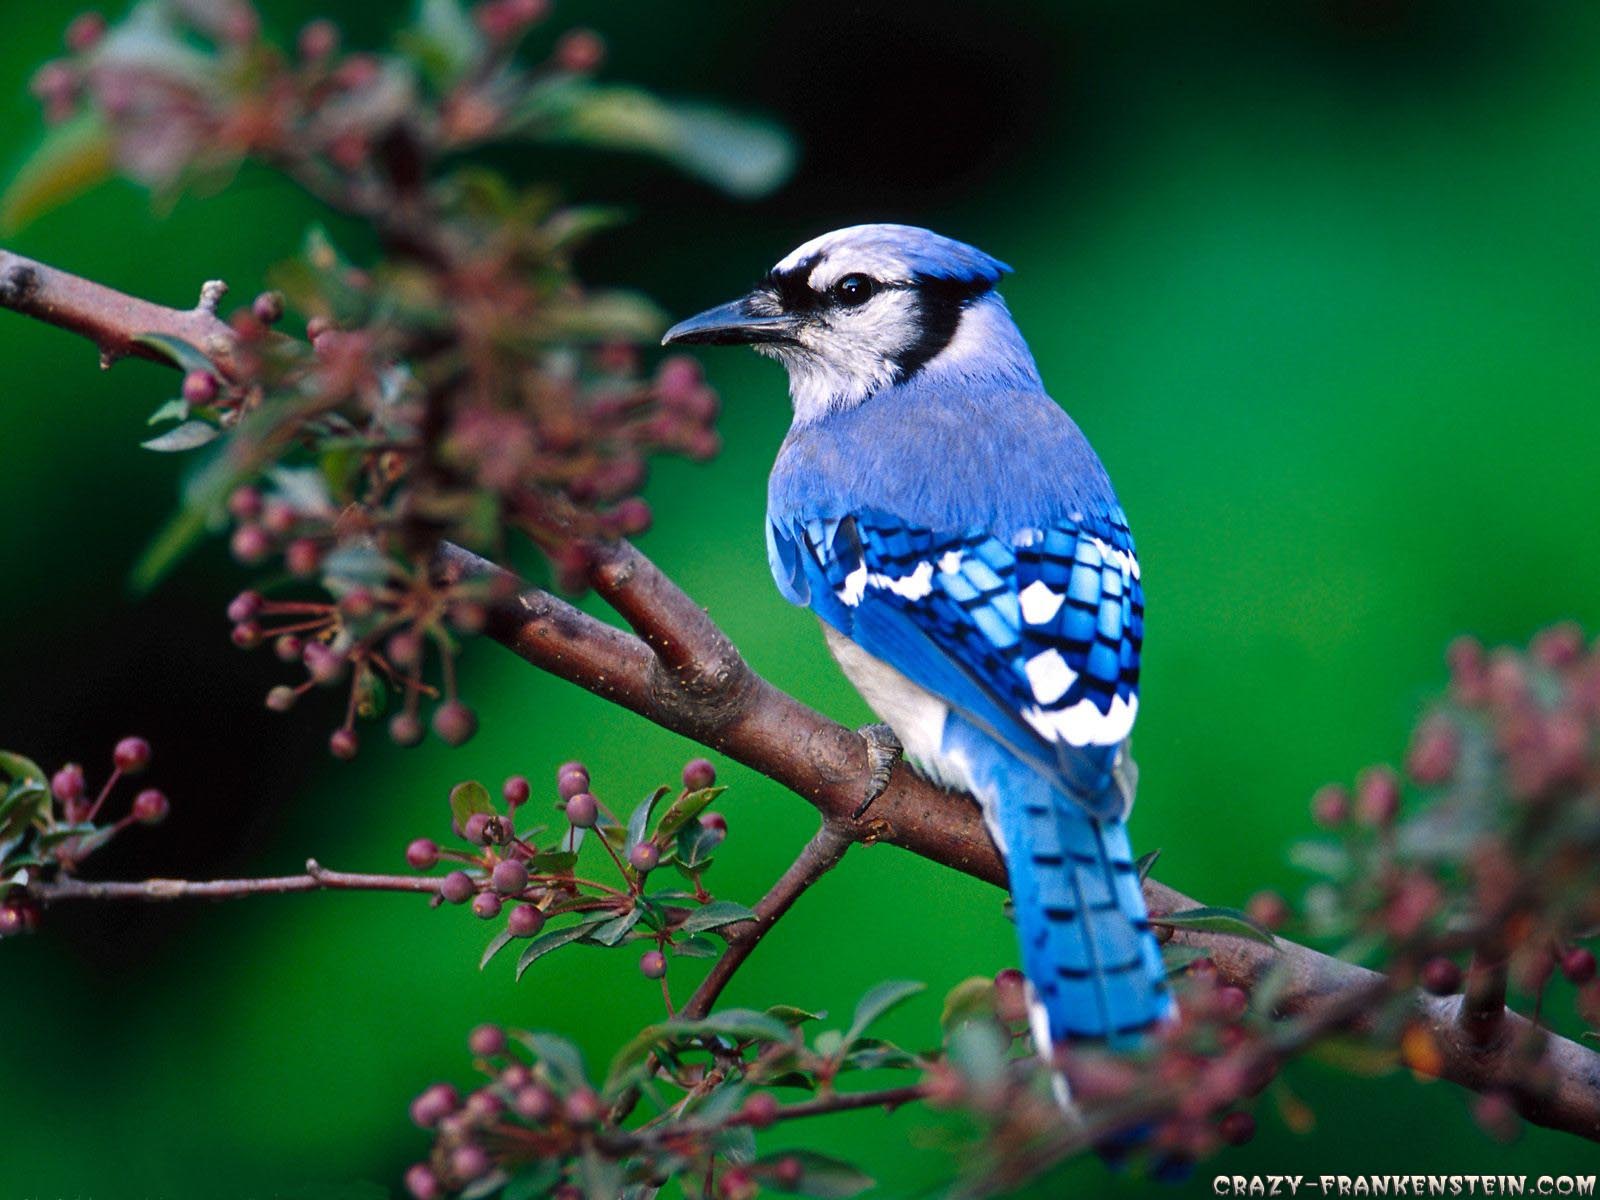 https://blogger.googleusercontent.com/img/b/R29vZ2xl/AVvXsEgyCzLAXjTV4d8n0q6wHX7hT7pmO0GNNpFa7UiuVDKSnIqIYaYzNhhdG0Ba4V5TT5cIwUr8skrmn8RXEE1YlGrUqKamxaV8sSLnjwh3wkX1OsYkA6AYgp6jD8XZHJie3Yqw50lA3acQblU/s1600/beautiful-blue-bird-wallpaper.jpg